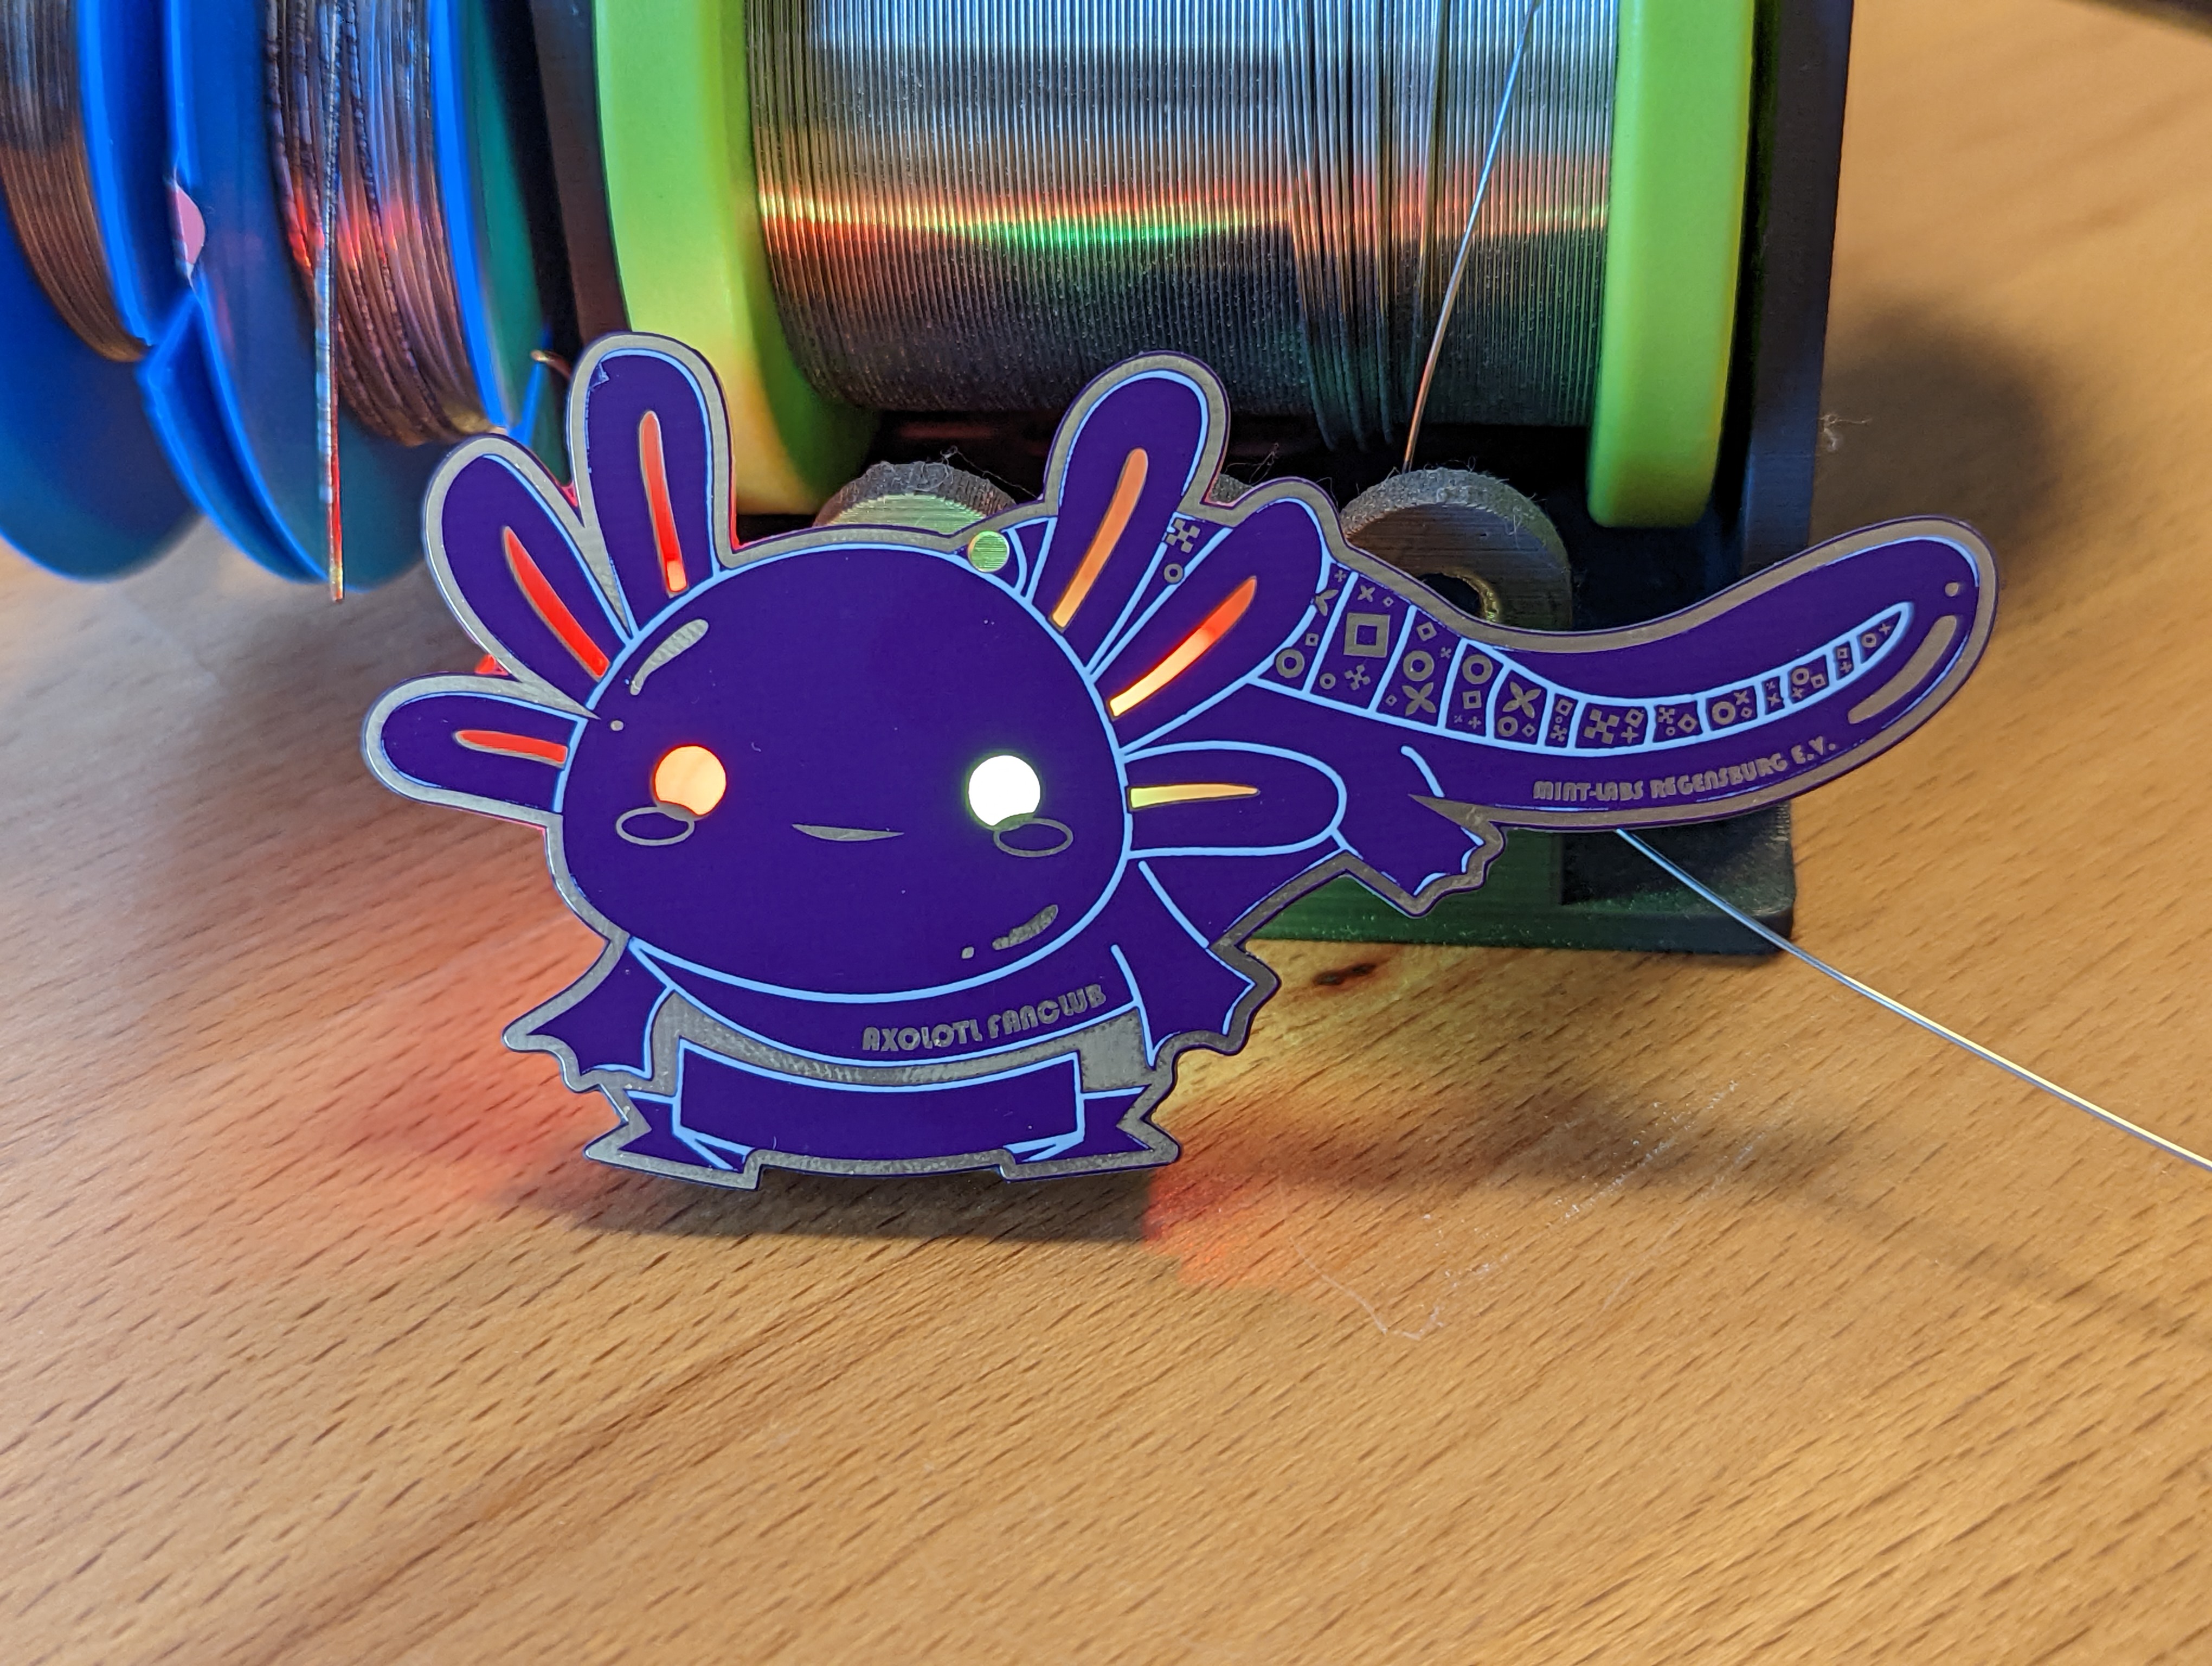 Axolotl Fanclub Badge - Ein Aushängeschild für absolute Axolotl-Fans!